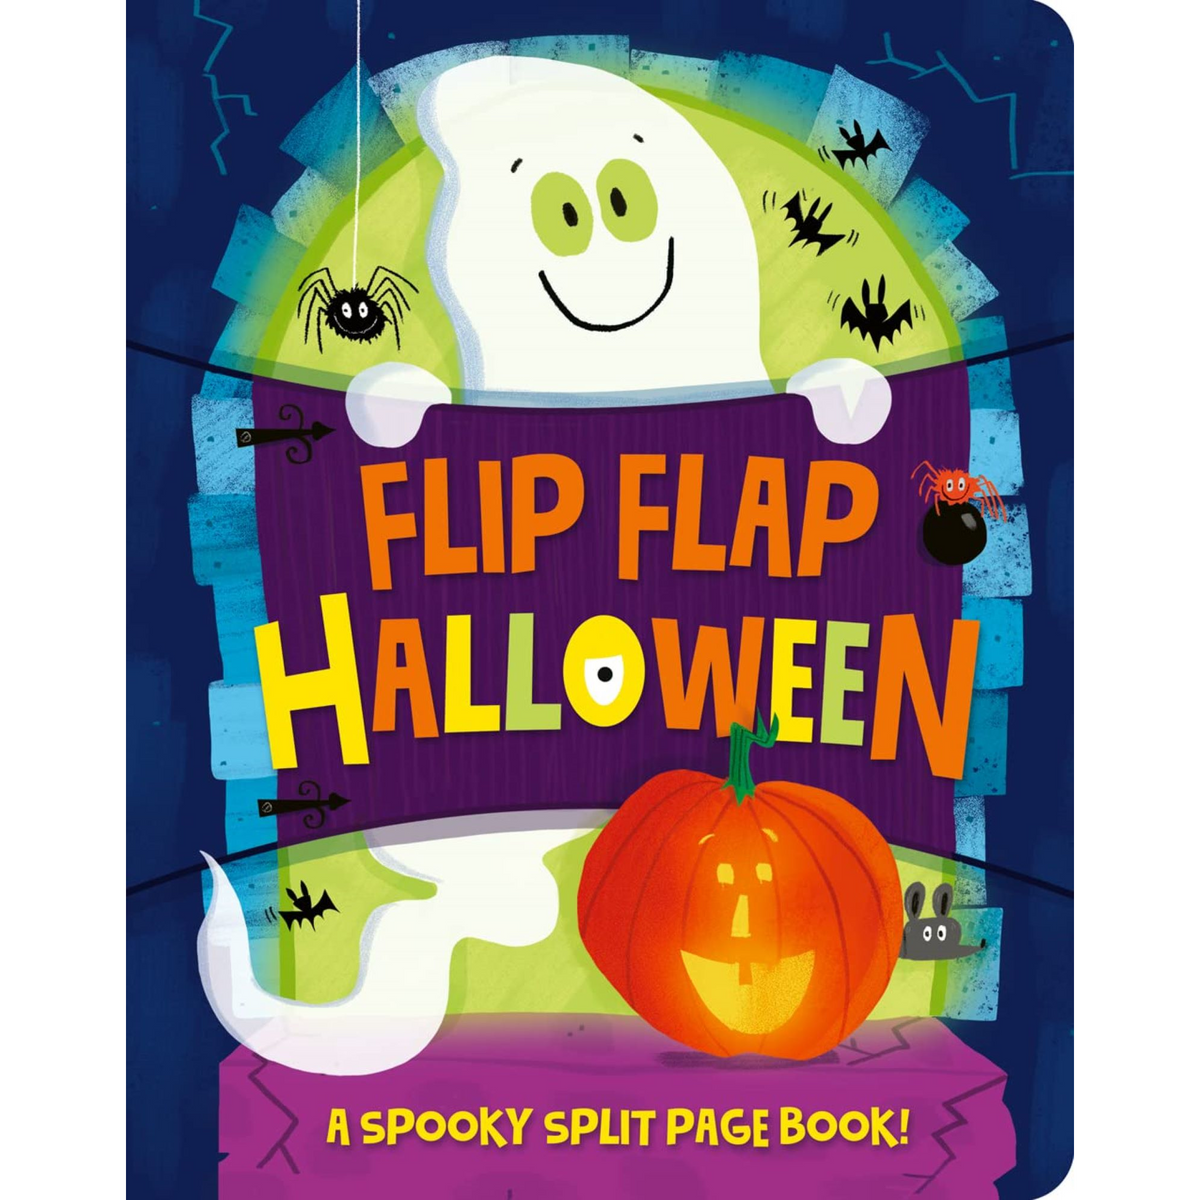 Flip Flap Halloween